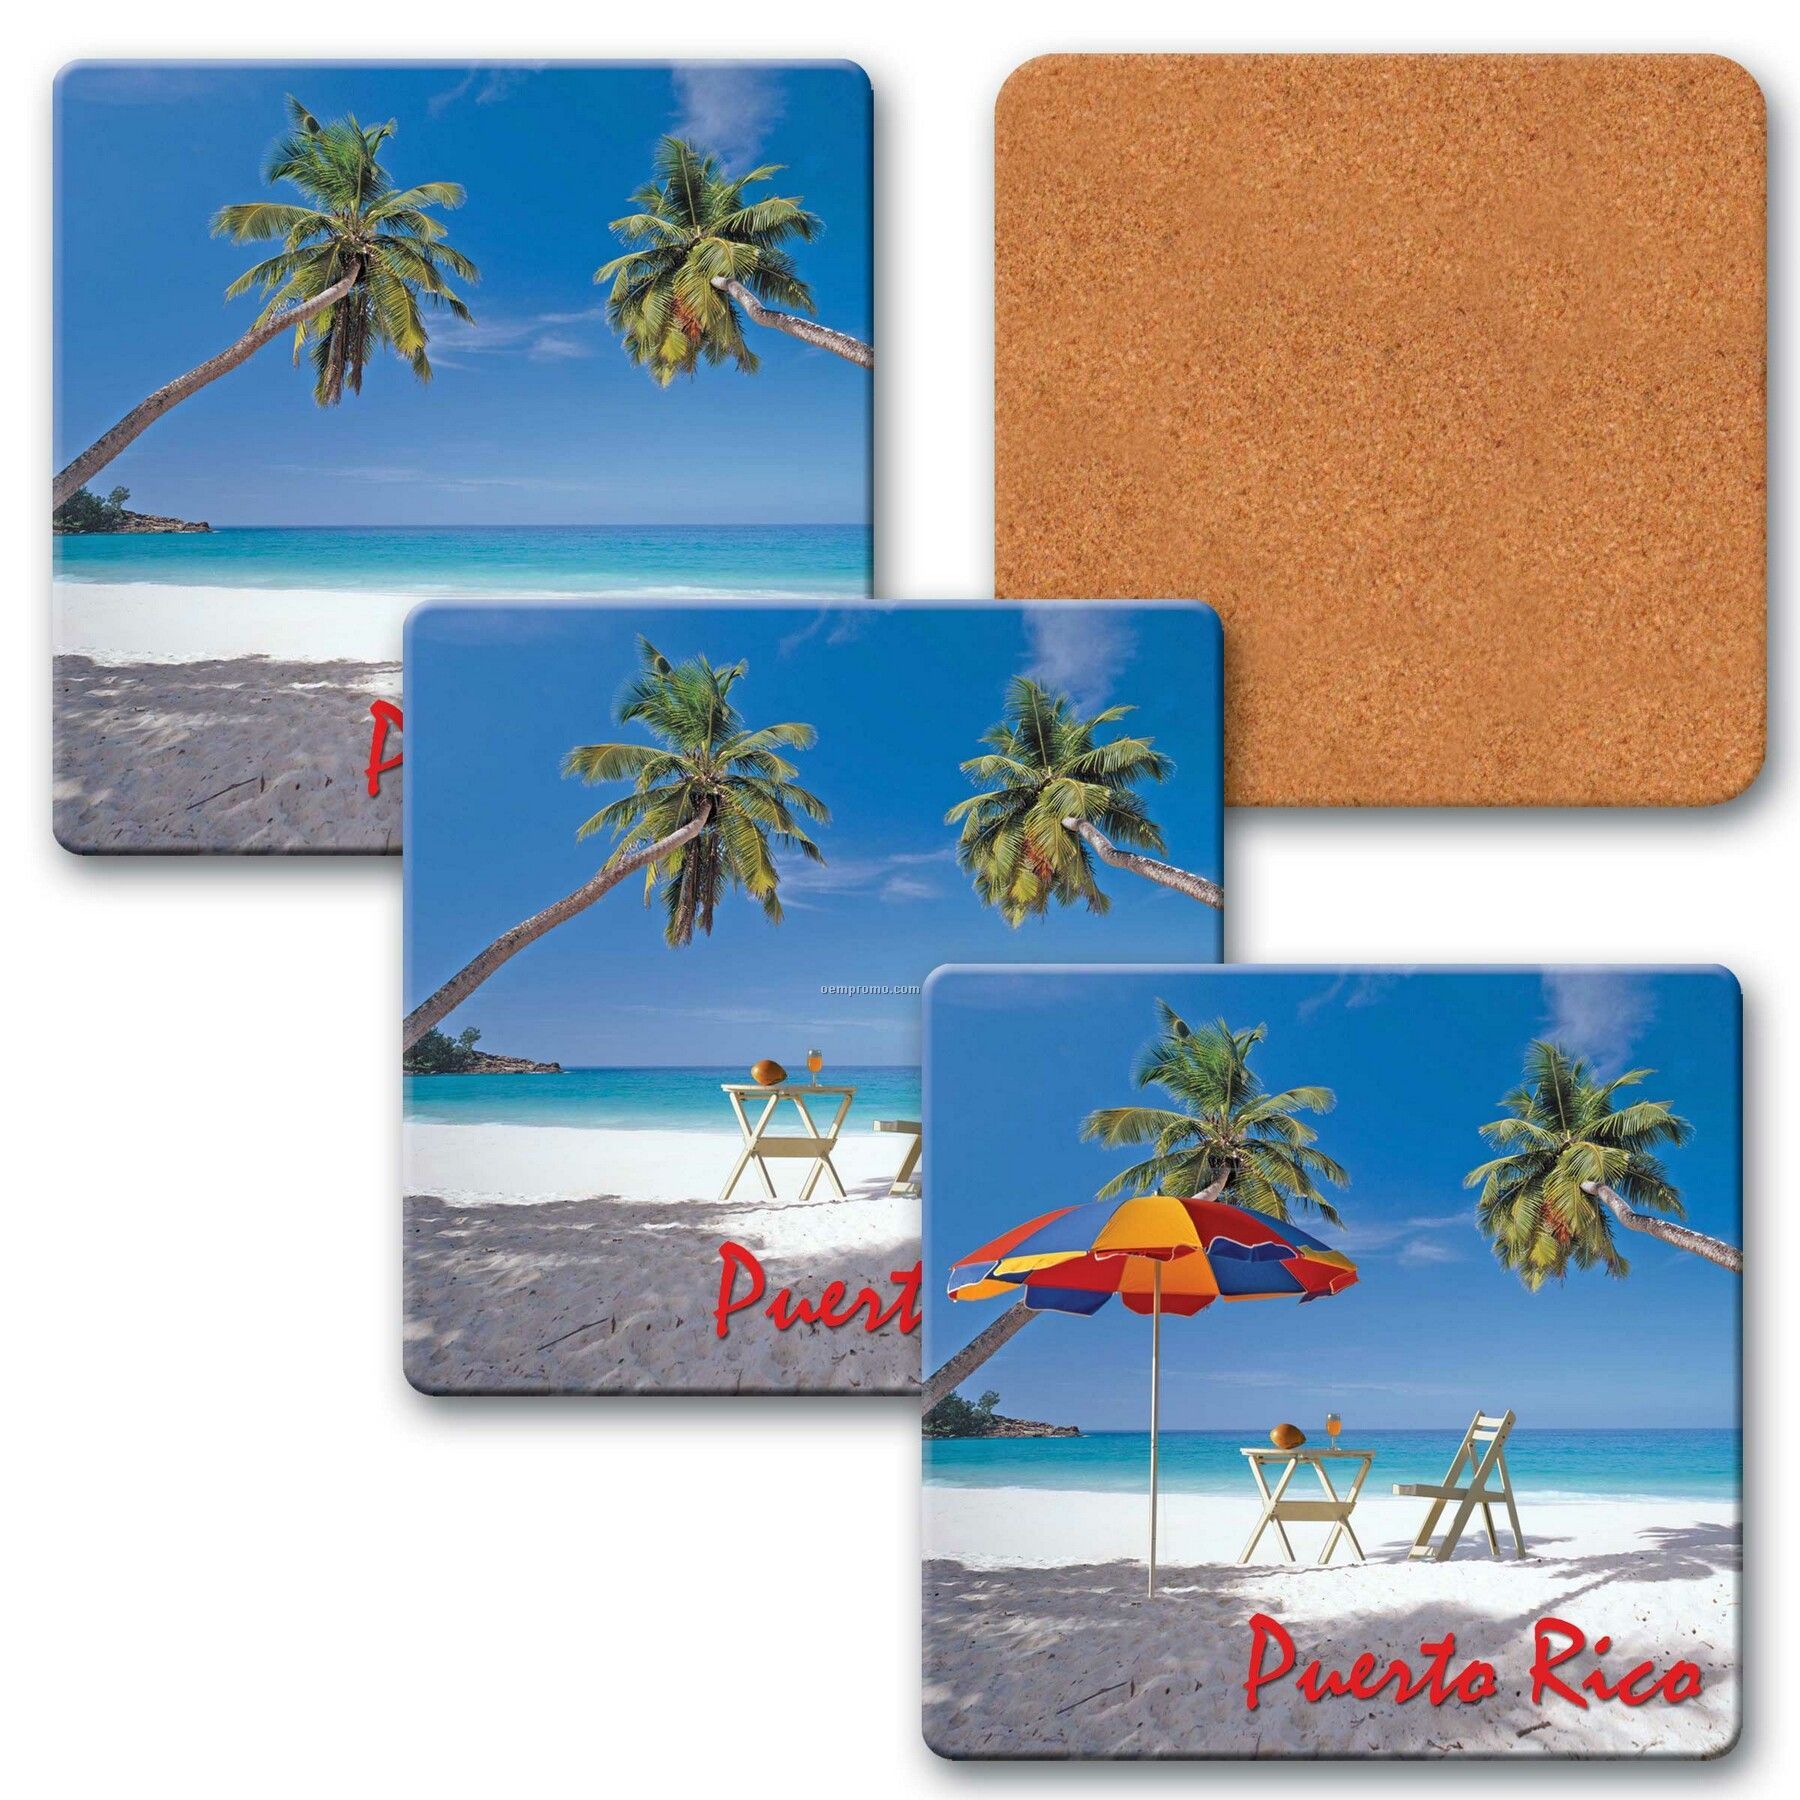 4" Square Coaster W/3d Lenticular Images Of A Tropical Beach (Custom)